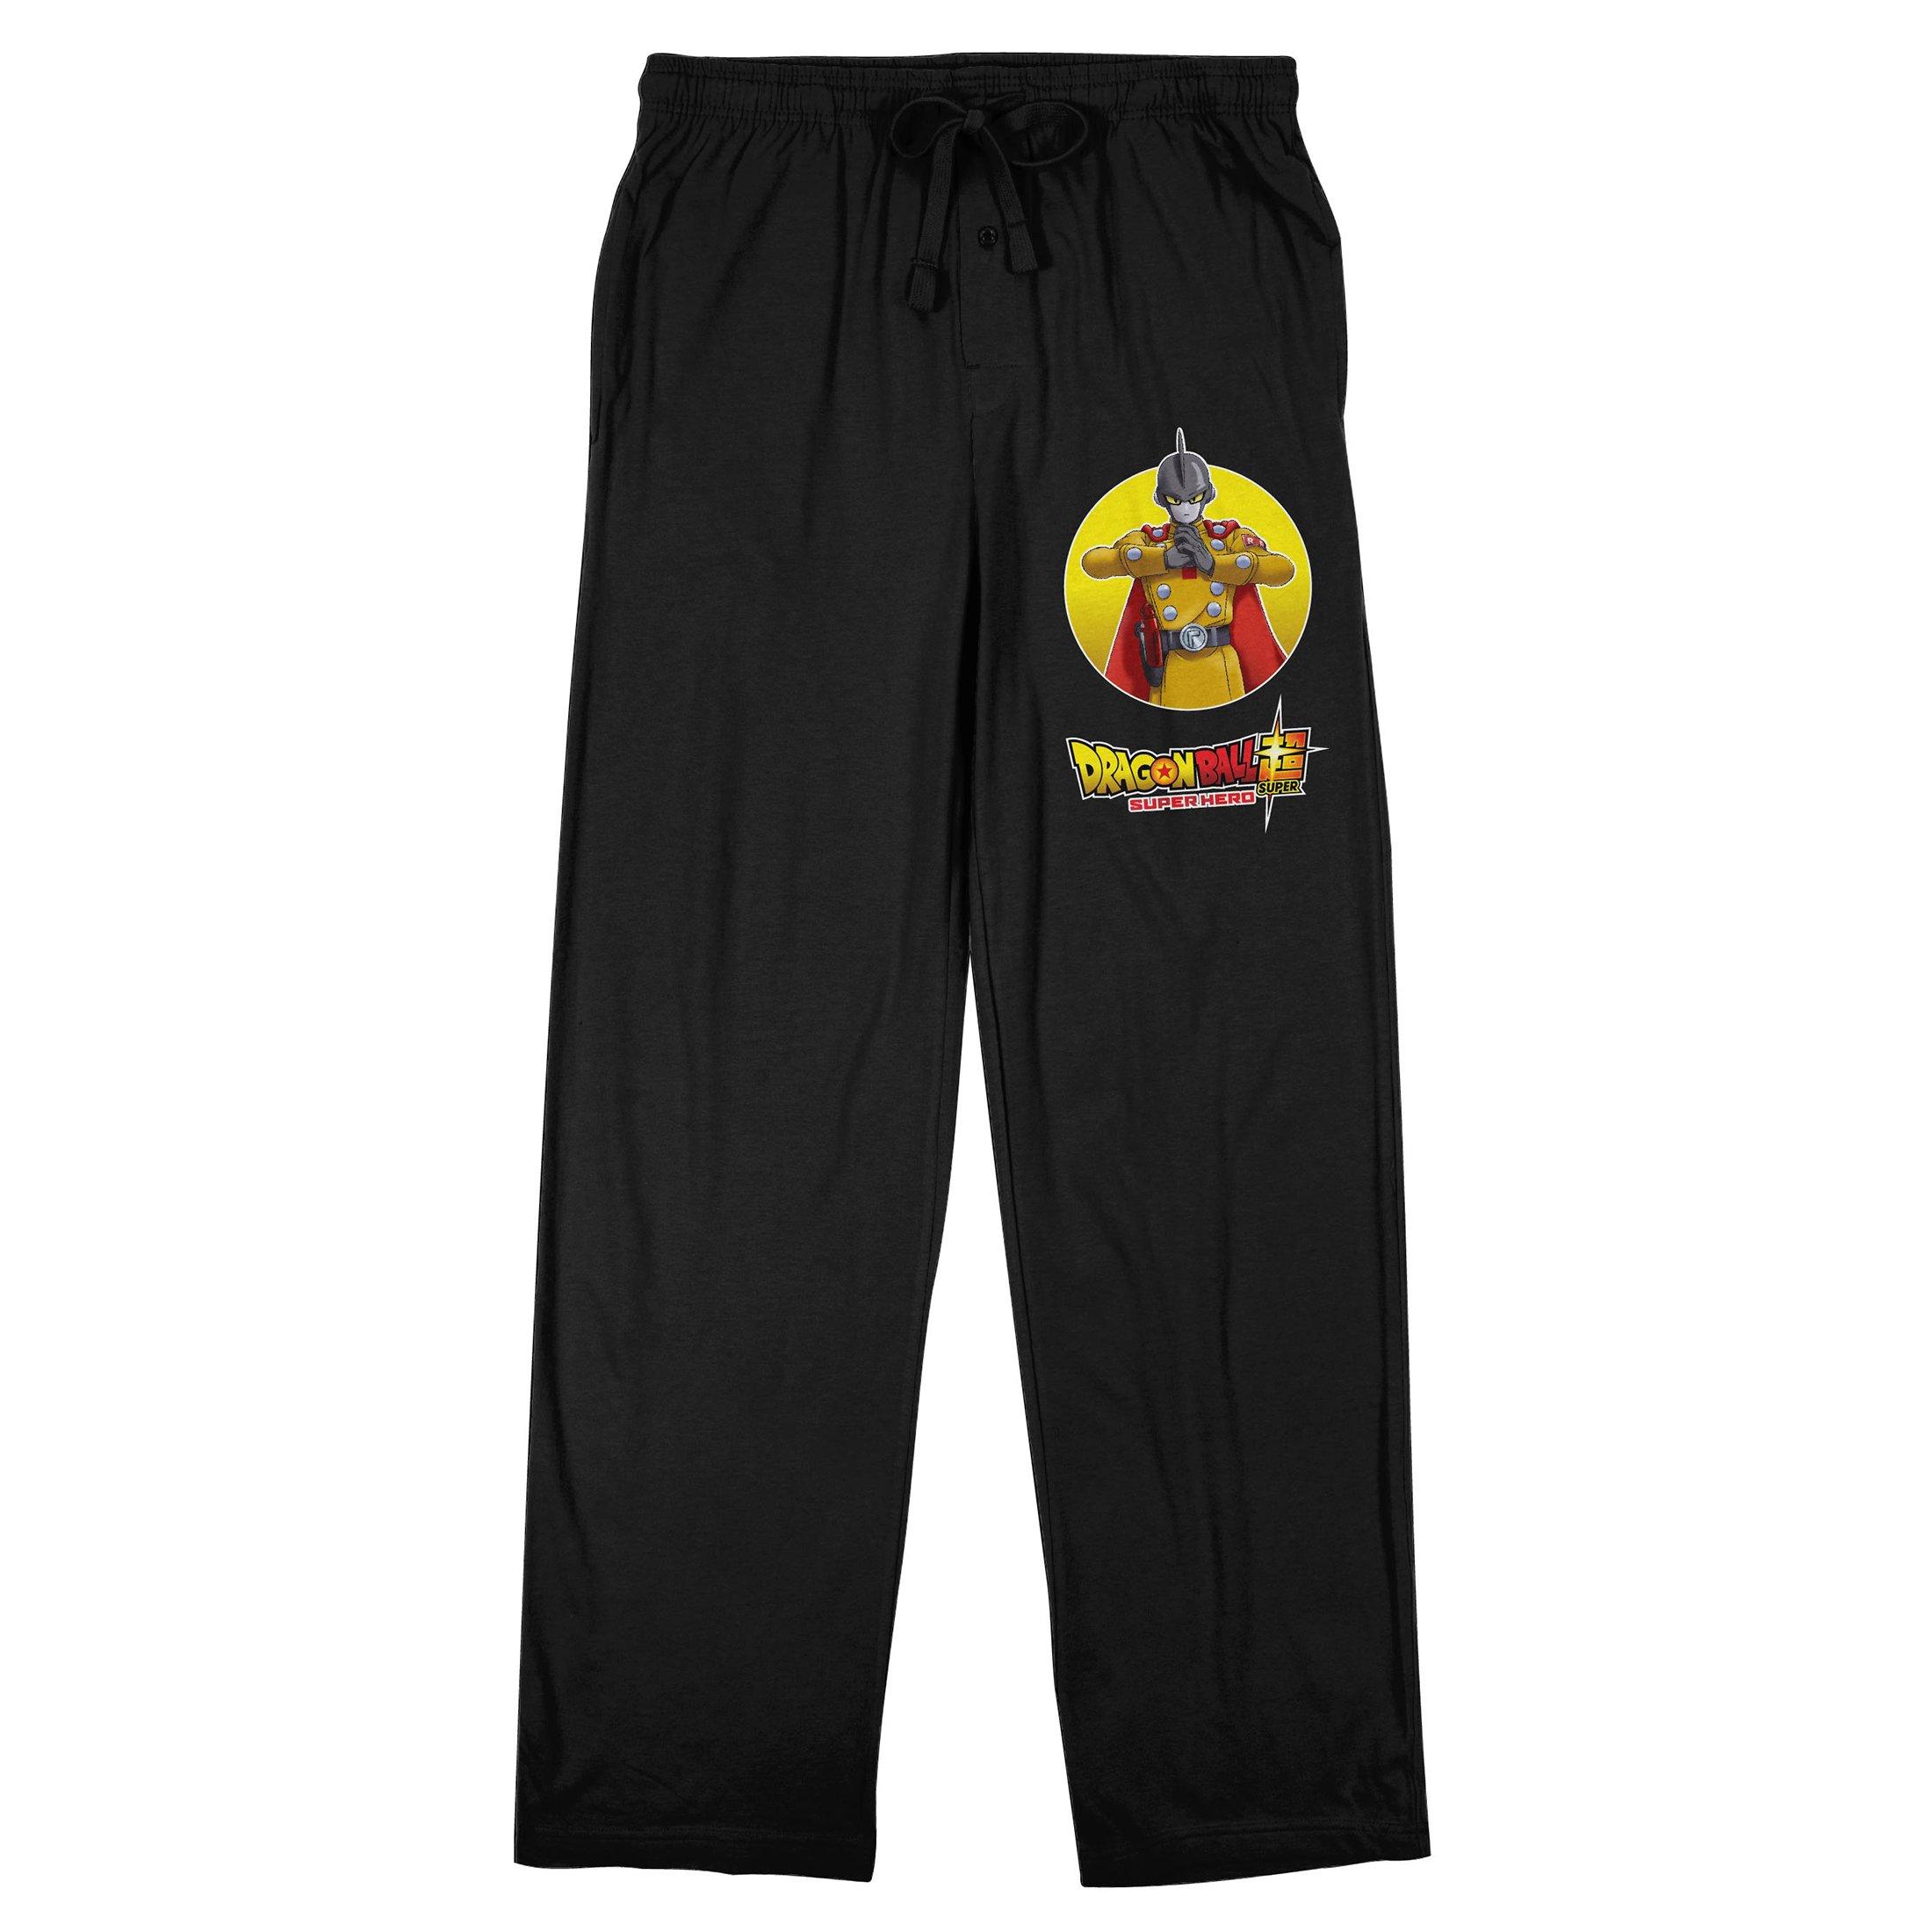 Dragon Ball Super: Super Hero Movie Gamma 1 Men's Black Pajama Pants